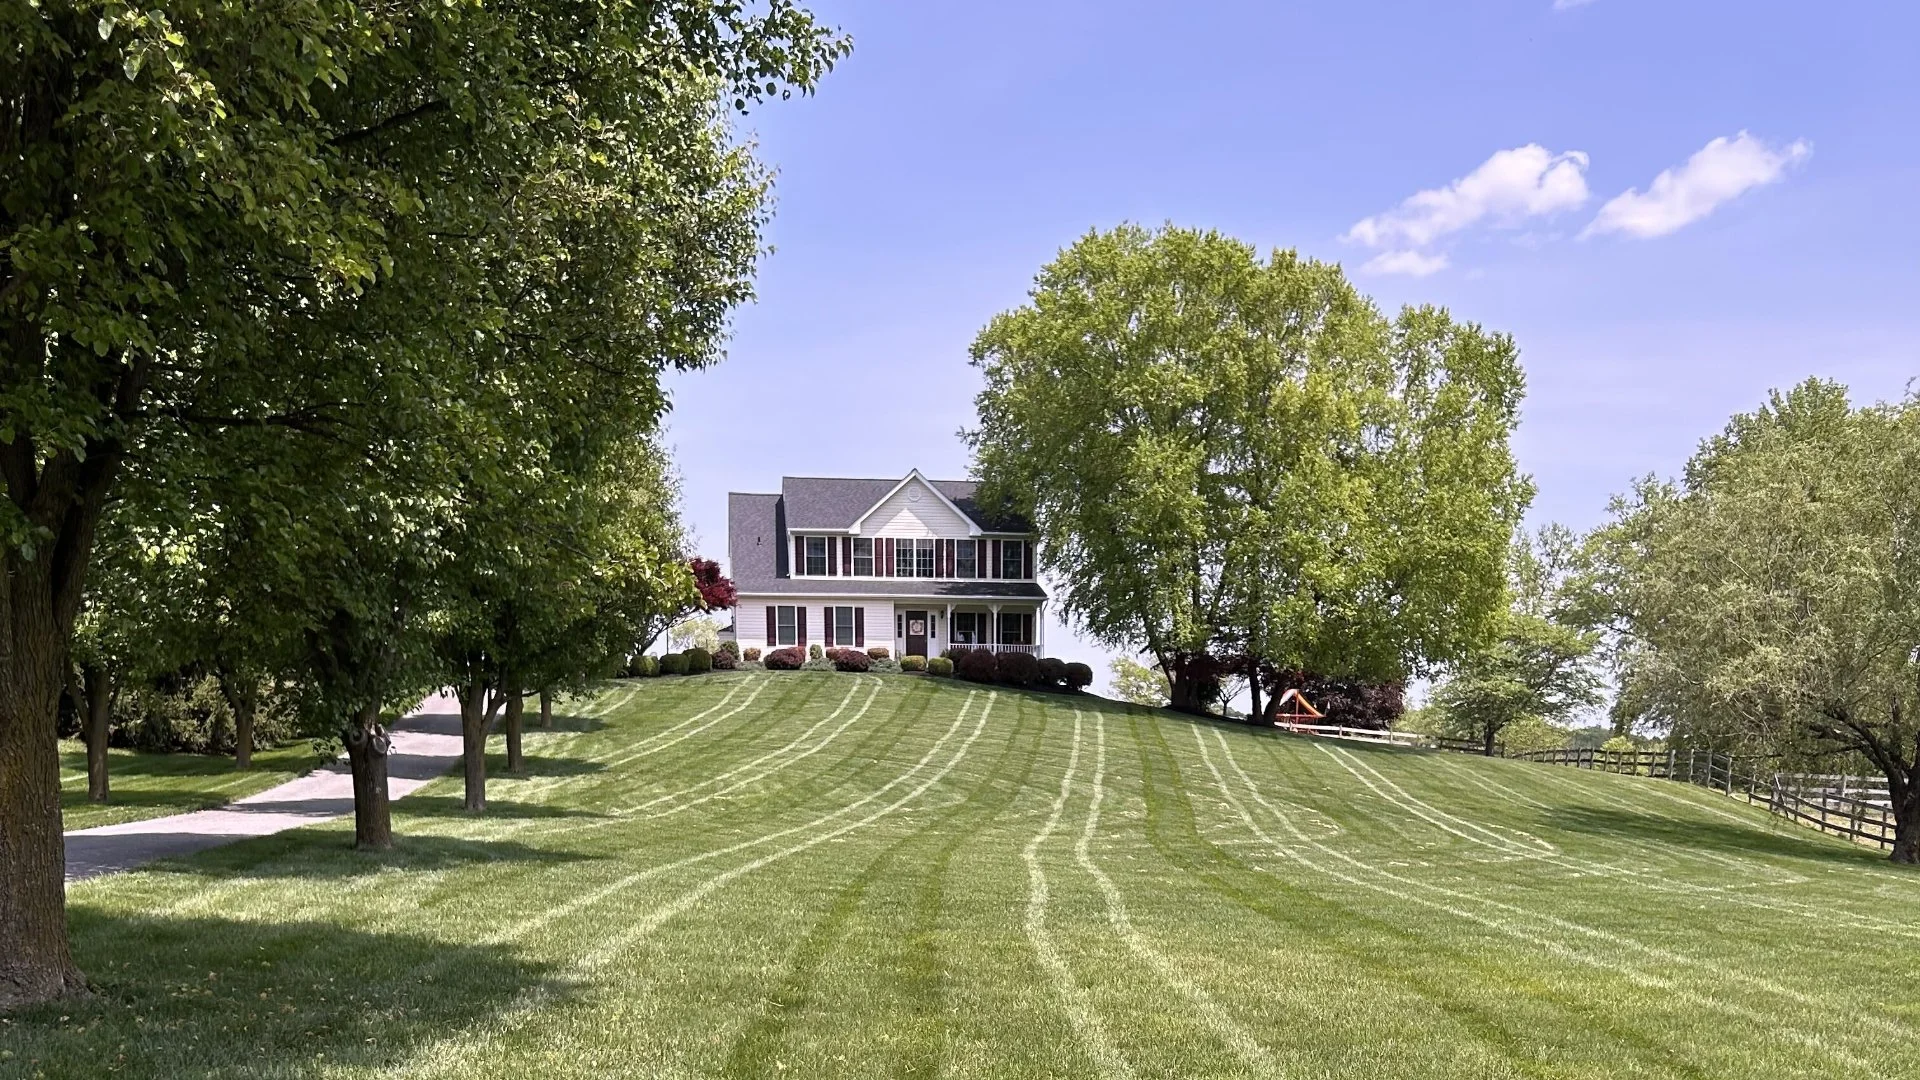 Finksburg, MD home with lush green grass.